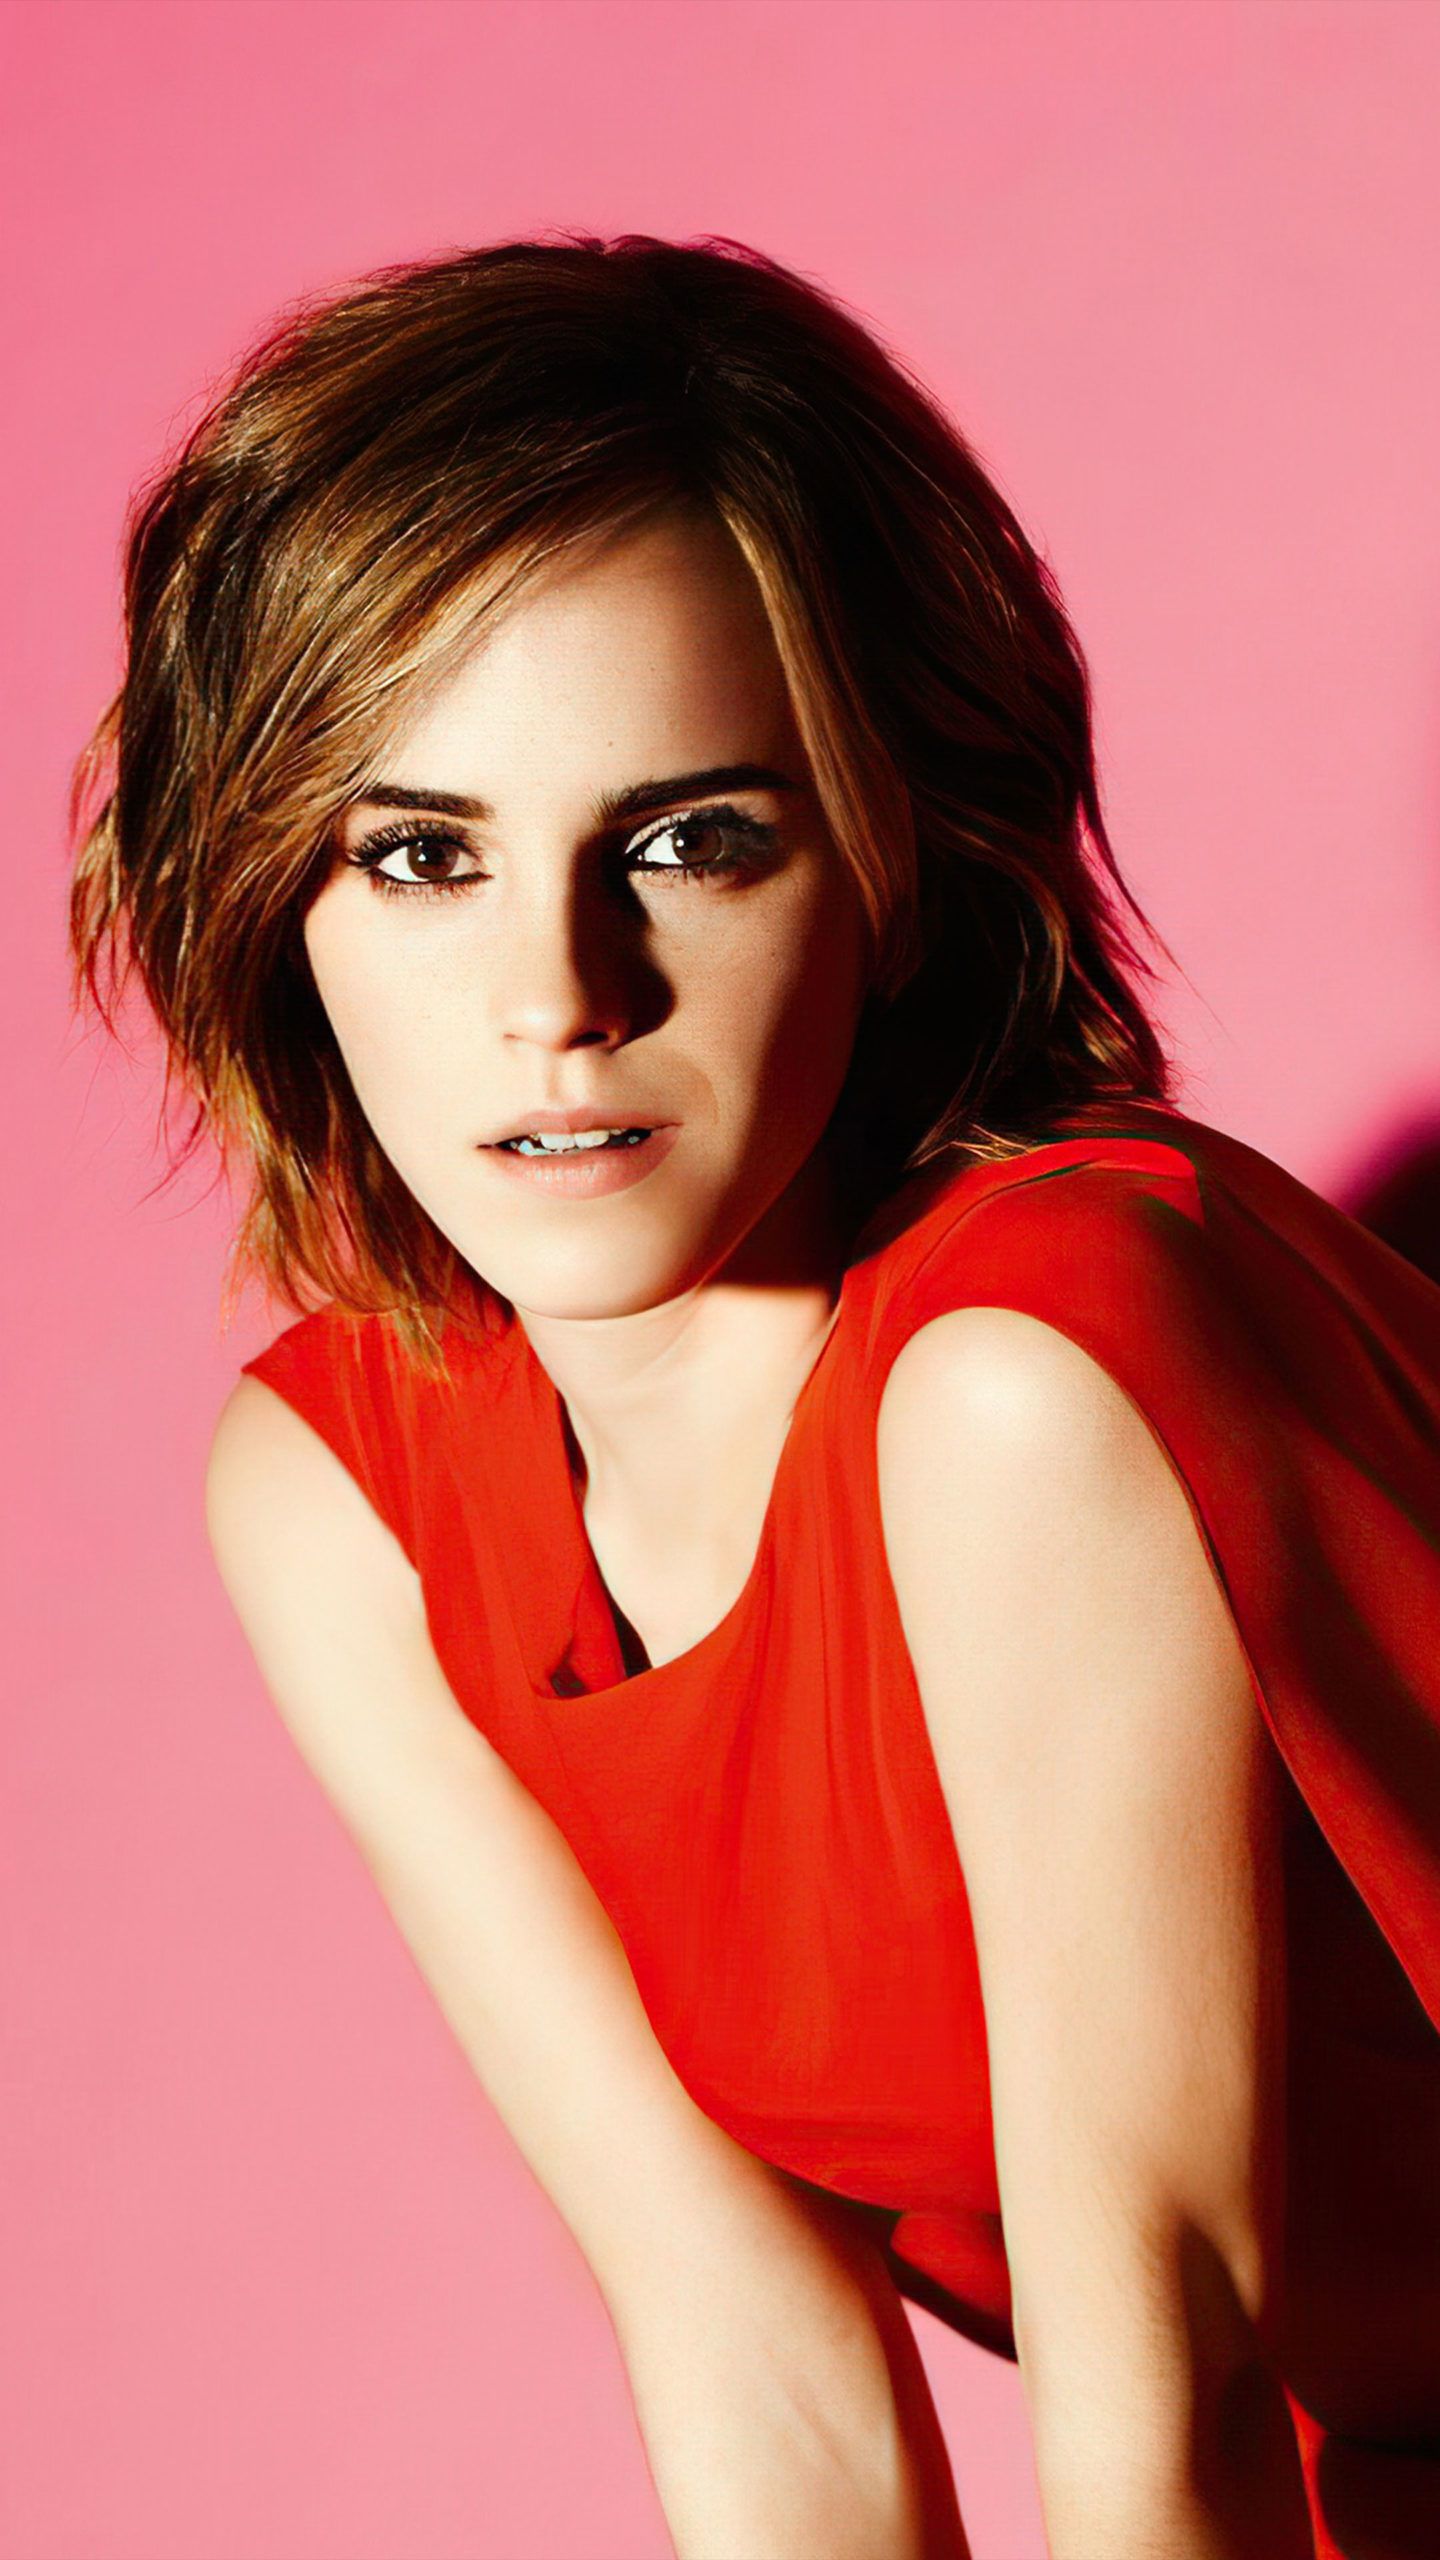 Emma Watson Red Dress 2021 Photohoot 4K Ultra HD Mobile Wallpaper